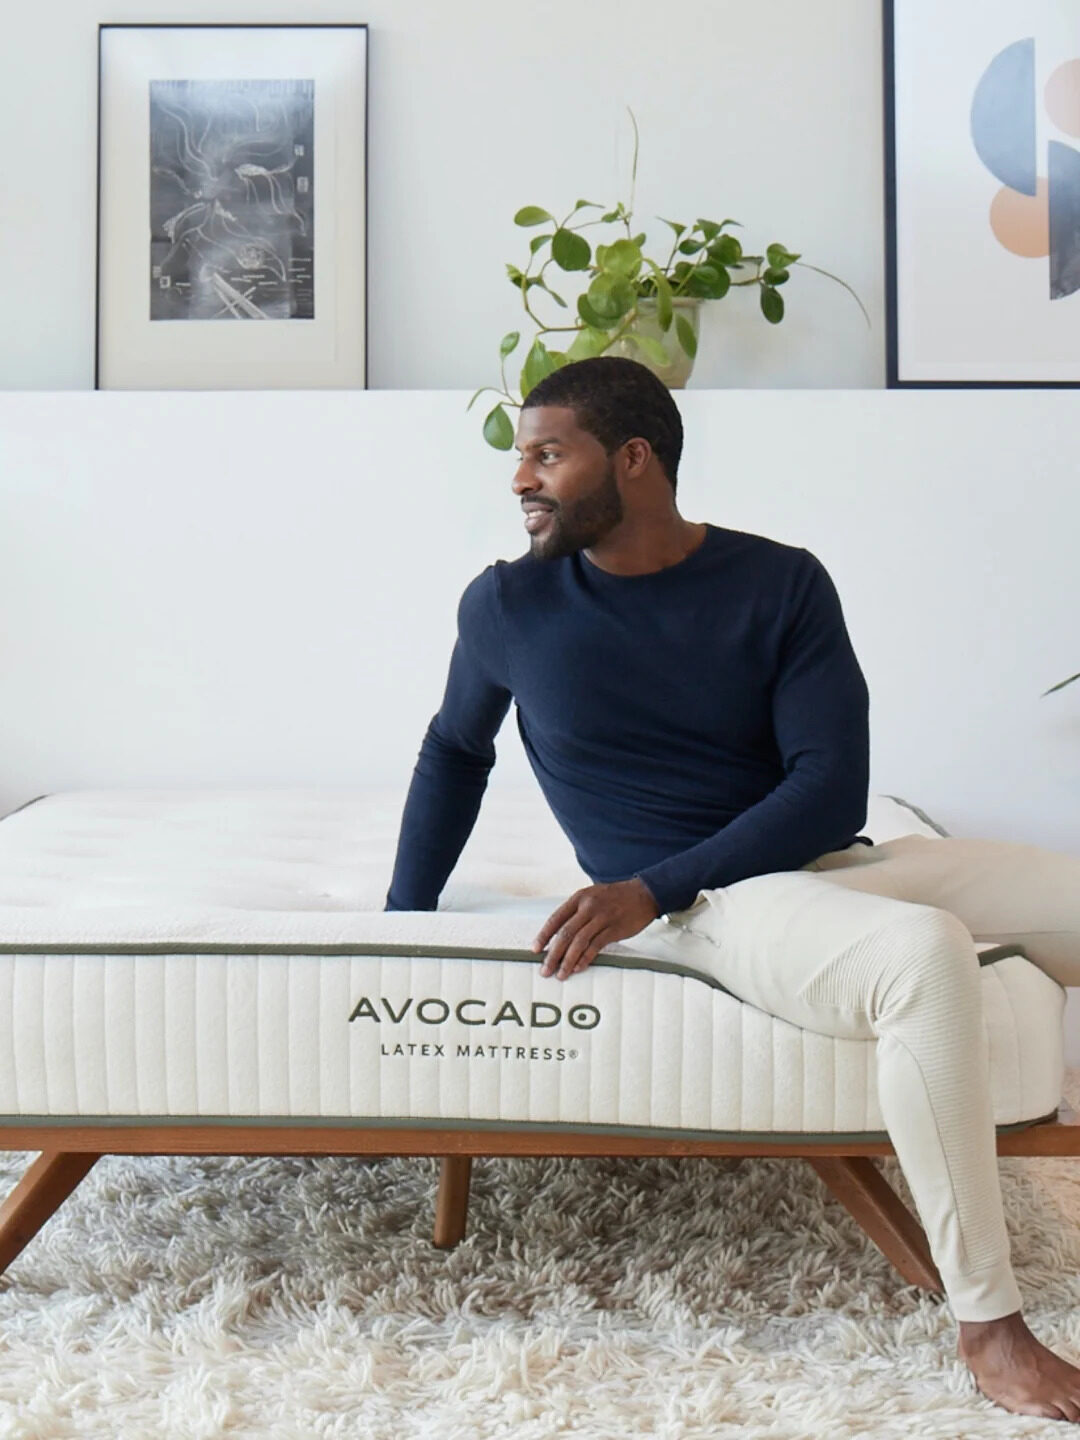 A model seated on an Avocado mattress.